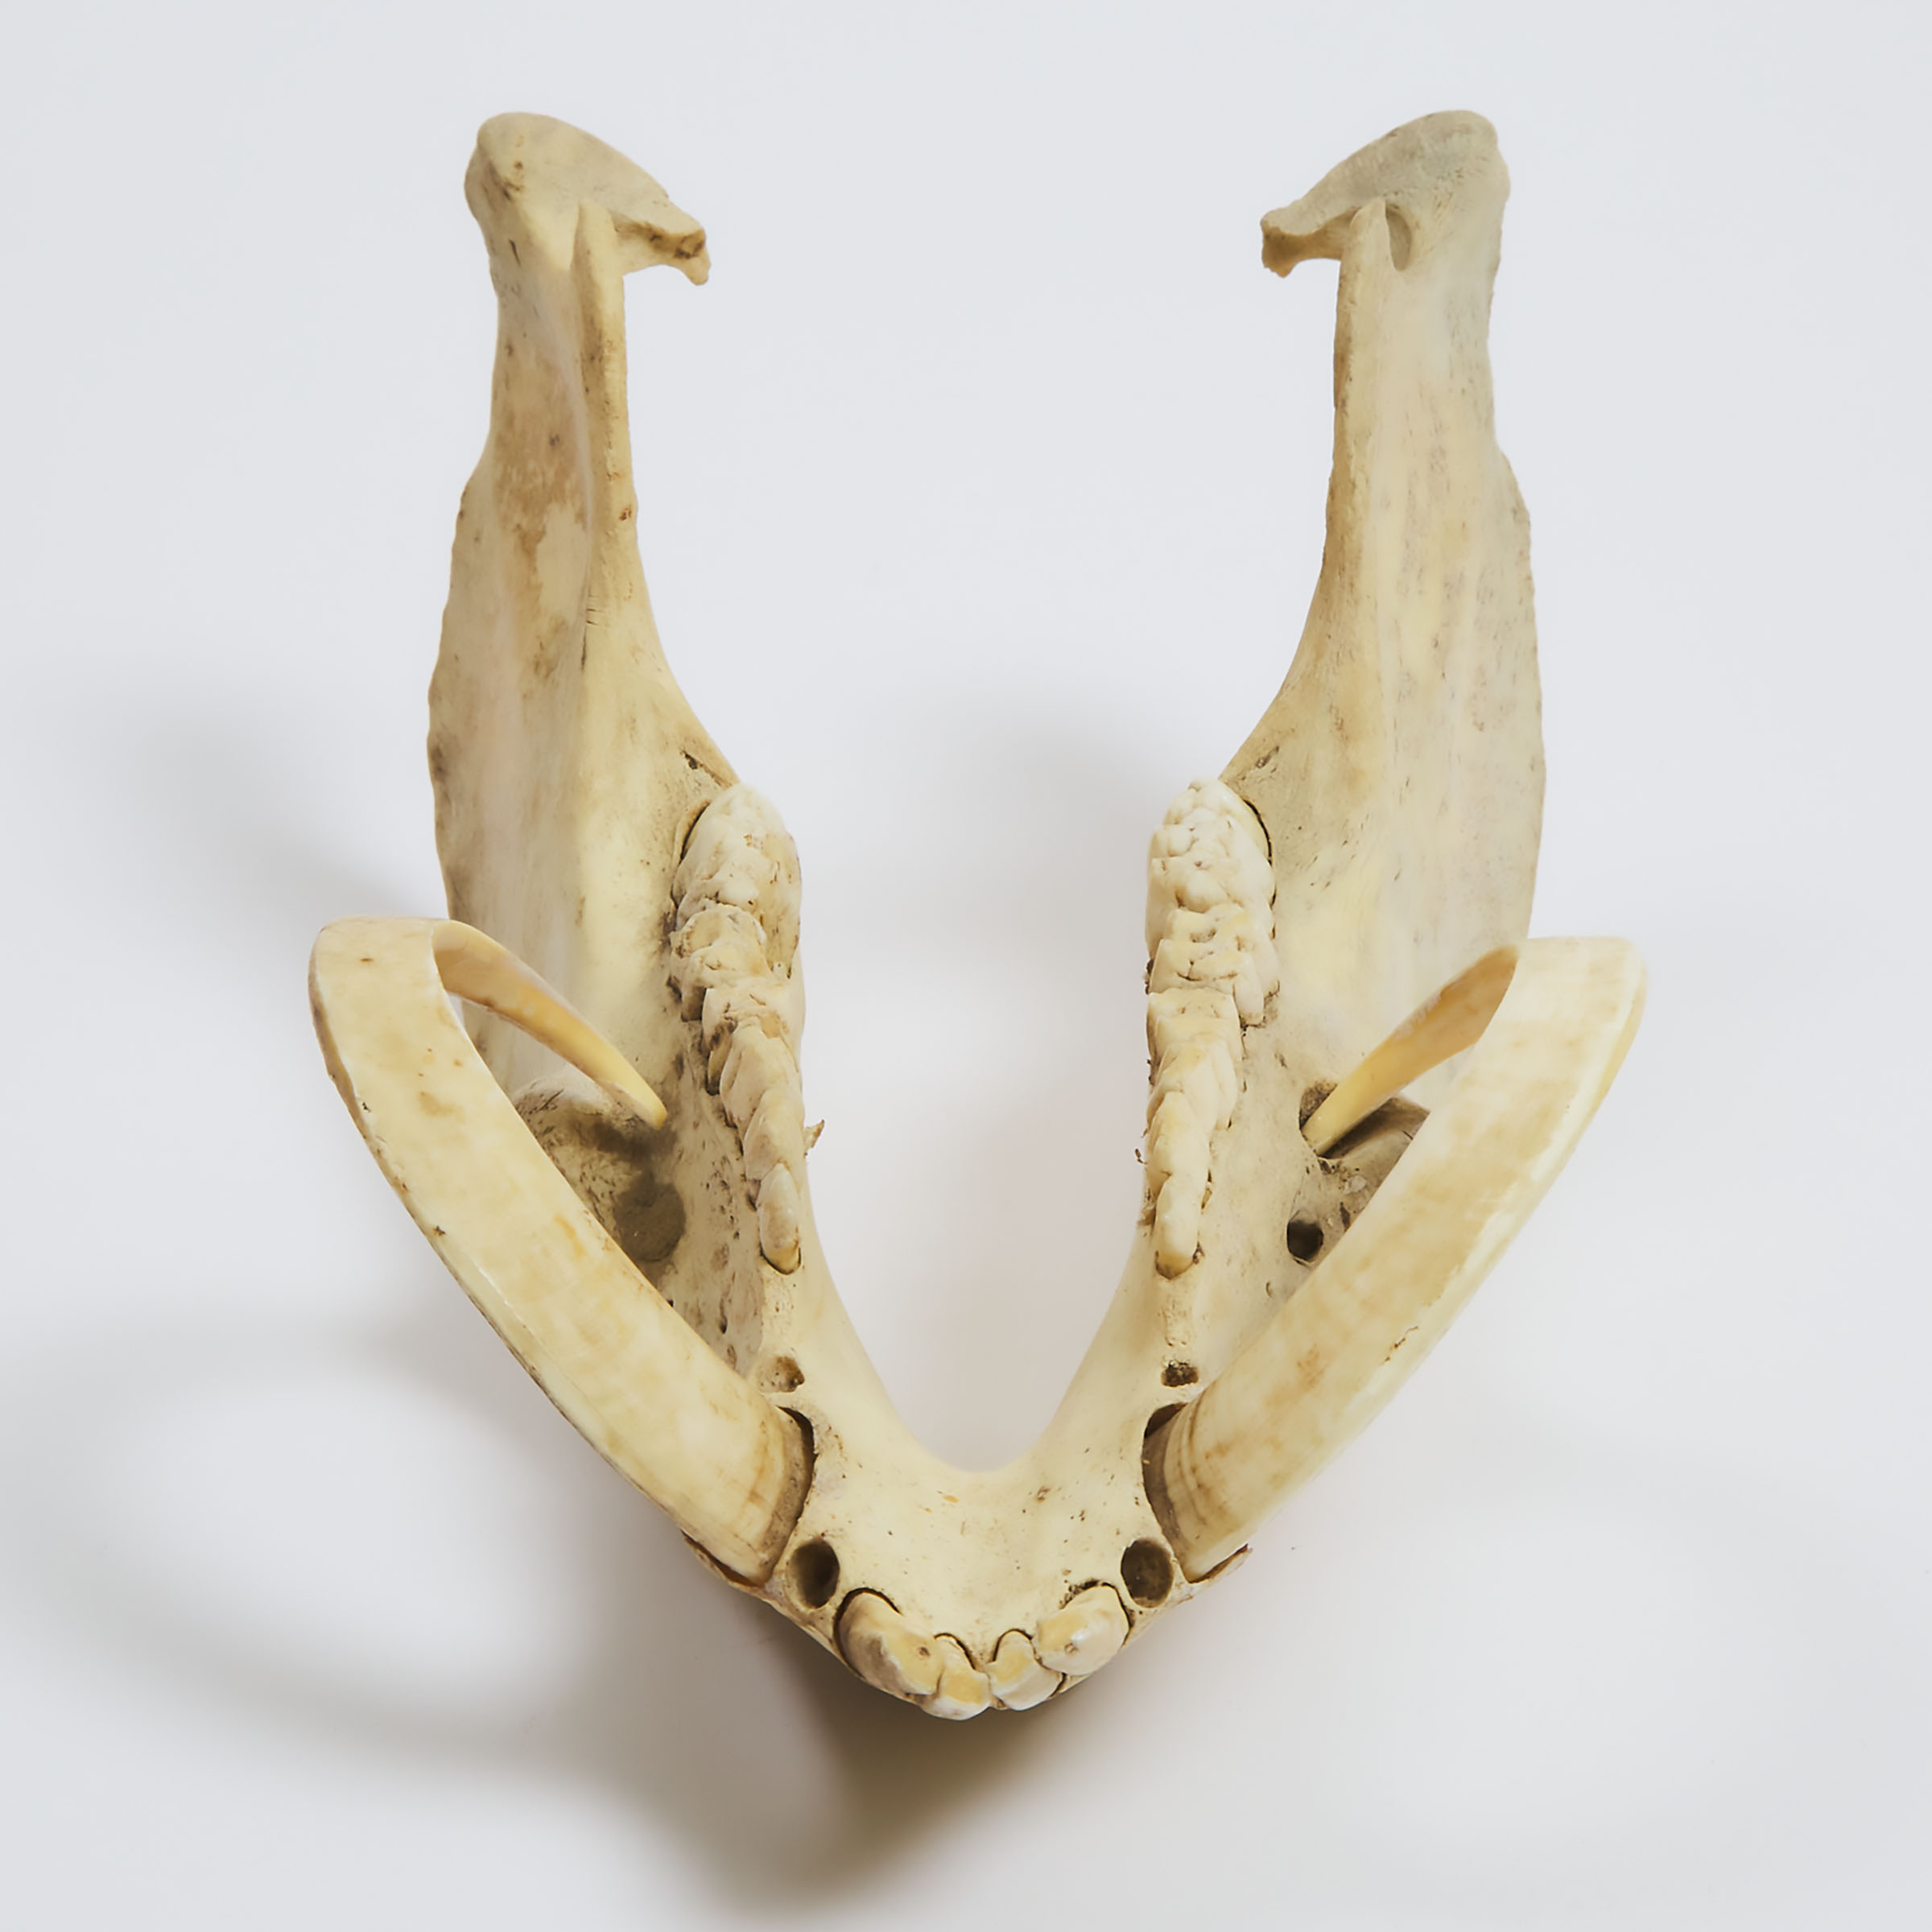 Australian Wild Boar Jawbone with Tusks, early-mid 20th century